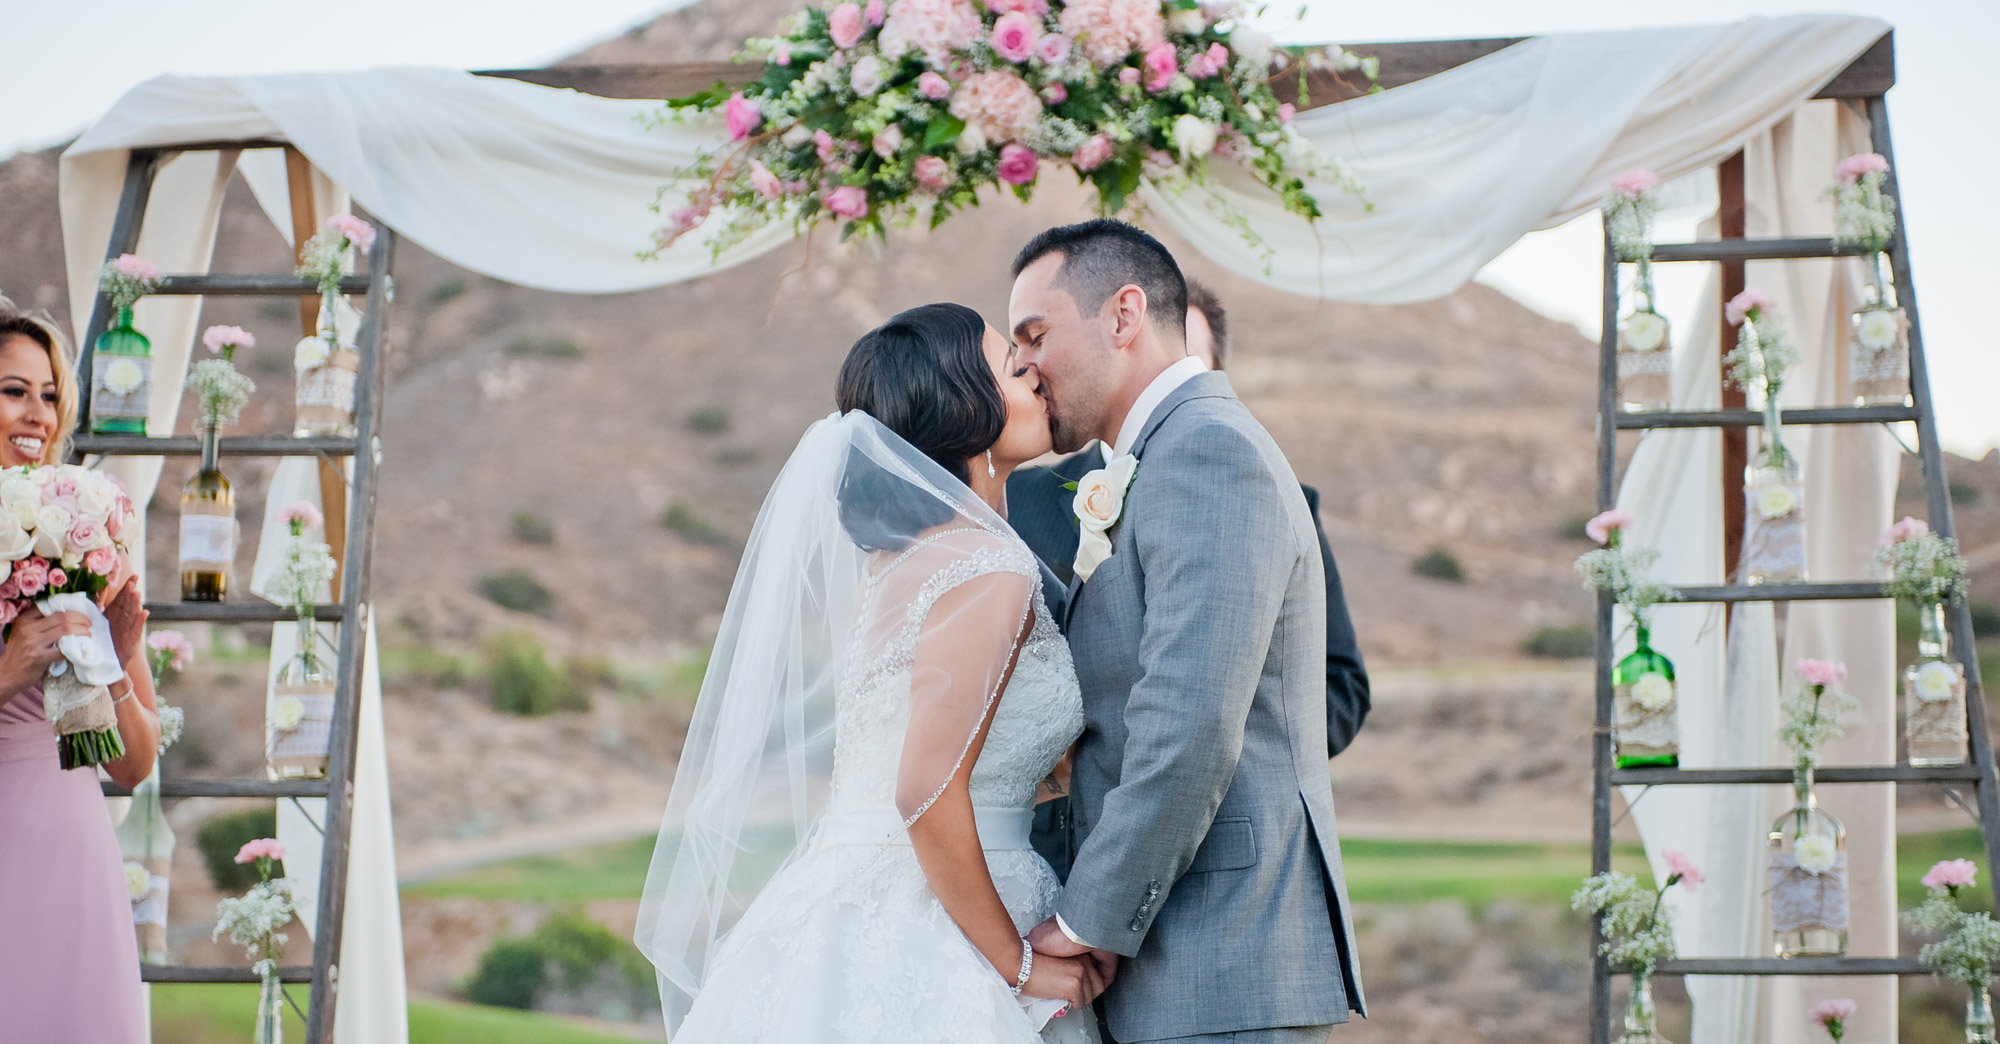 Marissa & James’ Wedding – Hermosa Beach Wedding Photography featured slider image